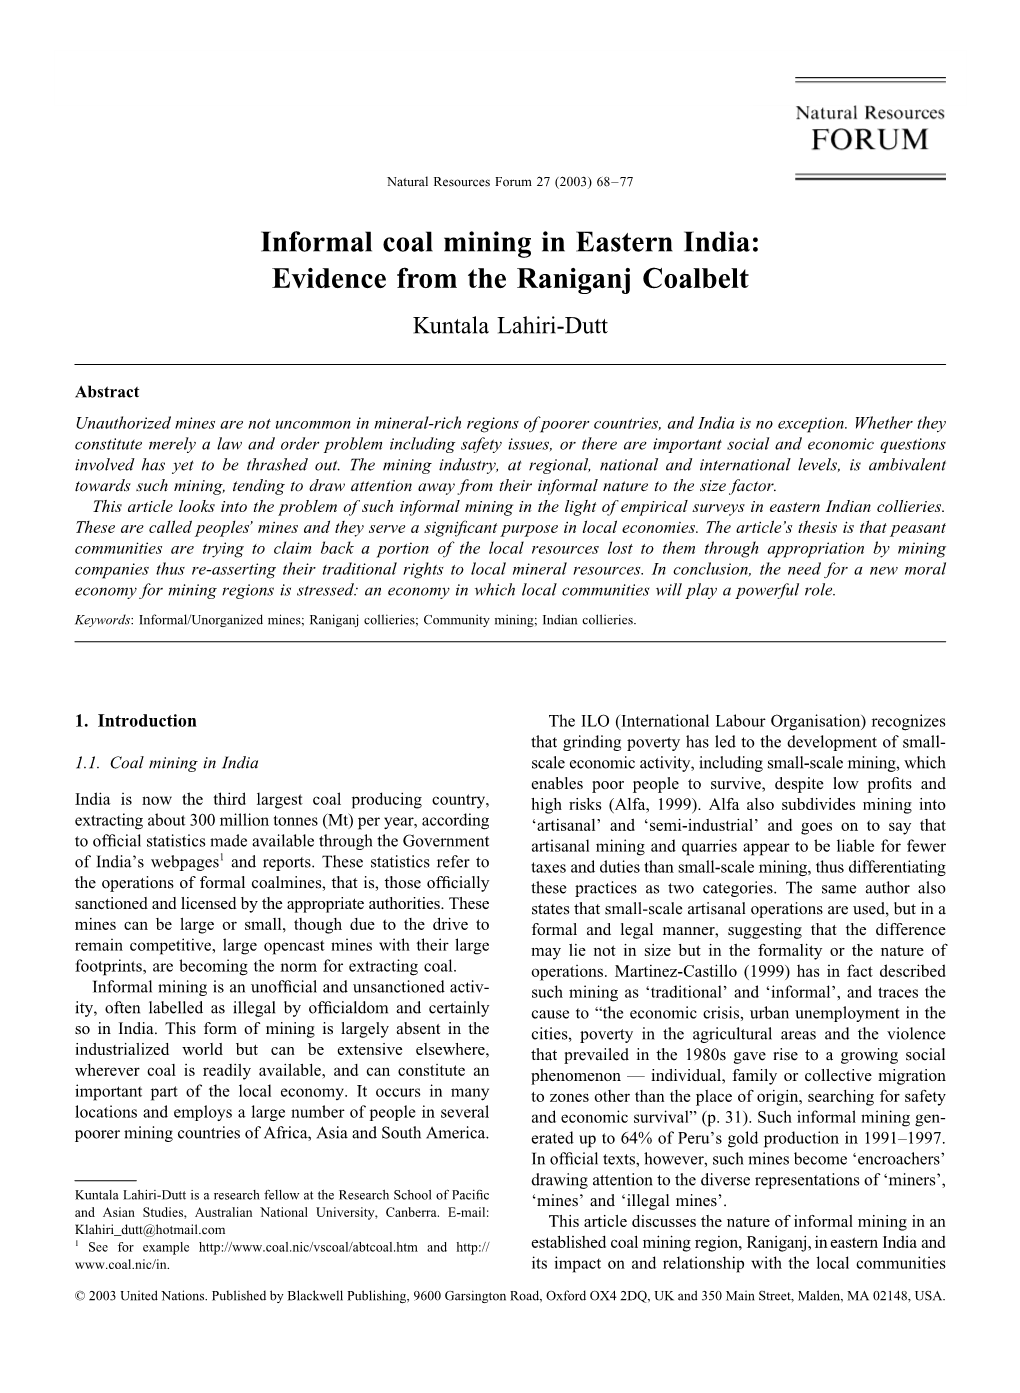 Informal Coal Mining in Eastern India: Evidence from the Raniganj Coalbelt Kuntala Lahiri-Dutt